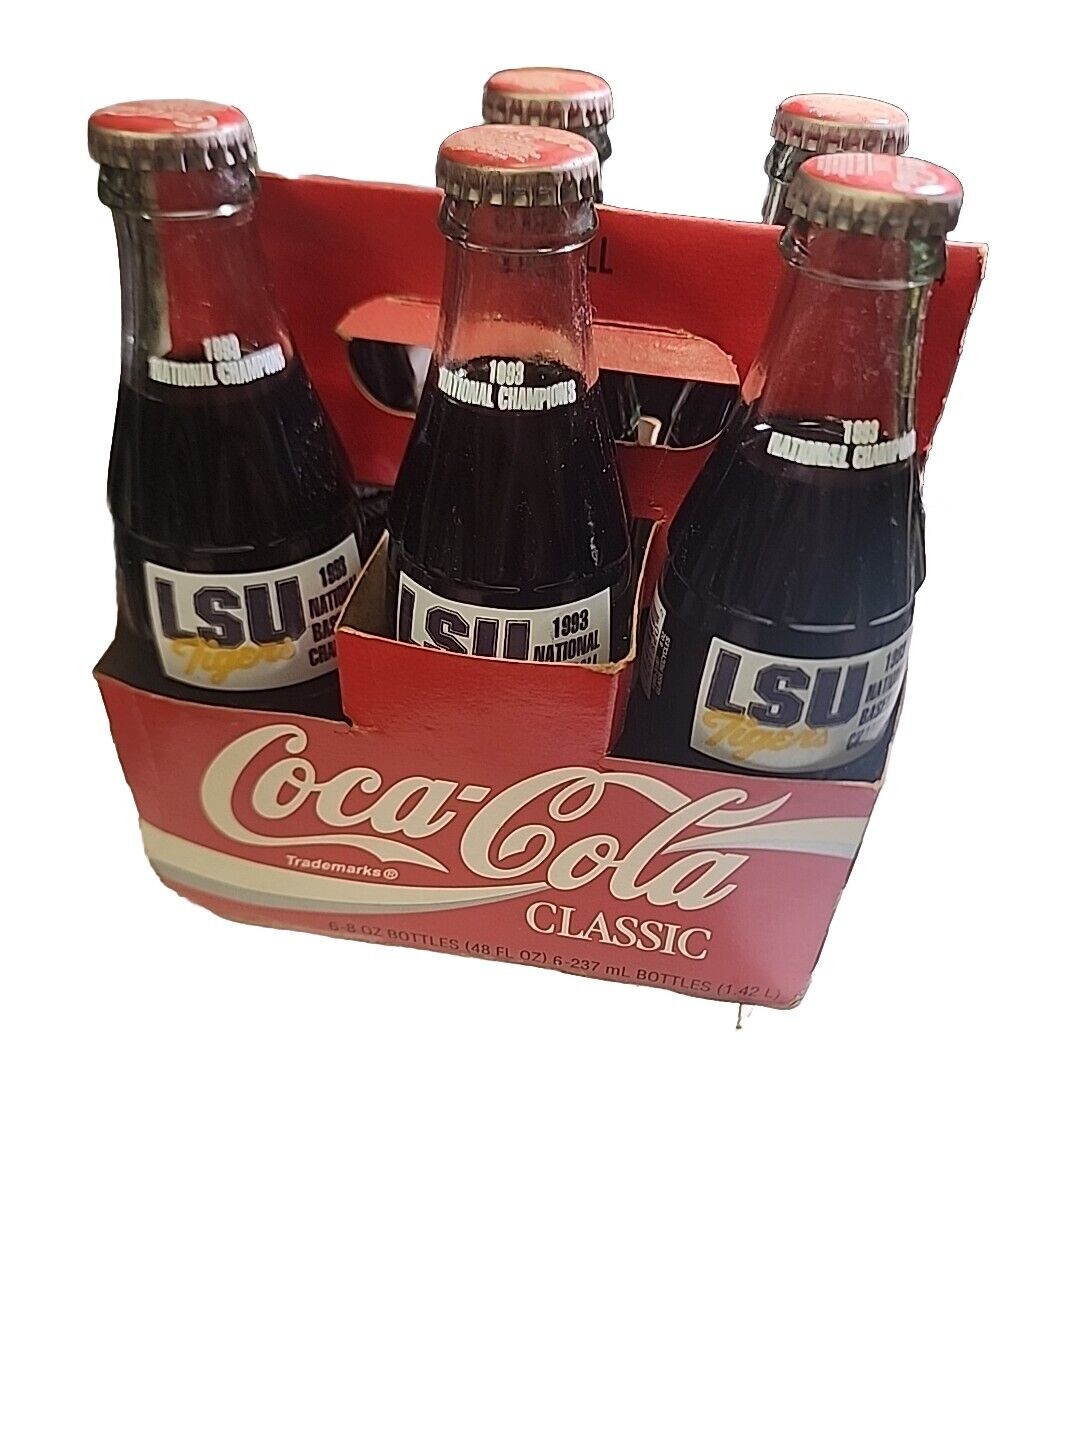 1993 National Baseball Champions LSU Tigers 6 Pack Coca Cola  8oz Bottles